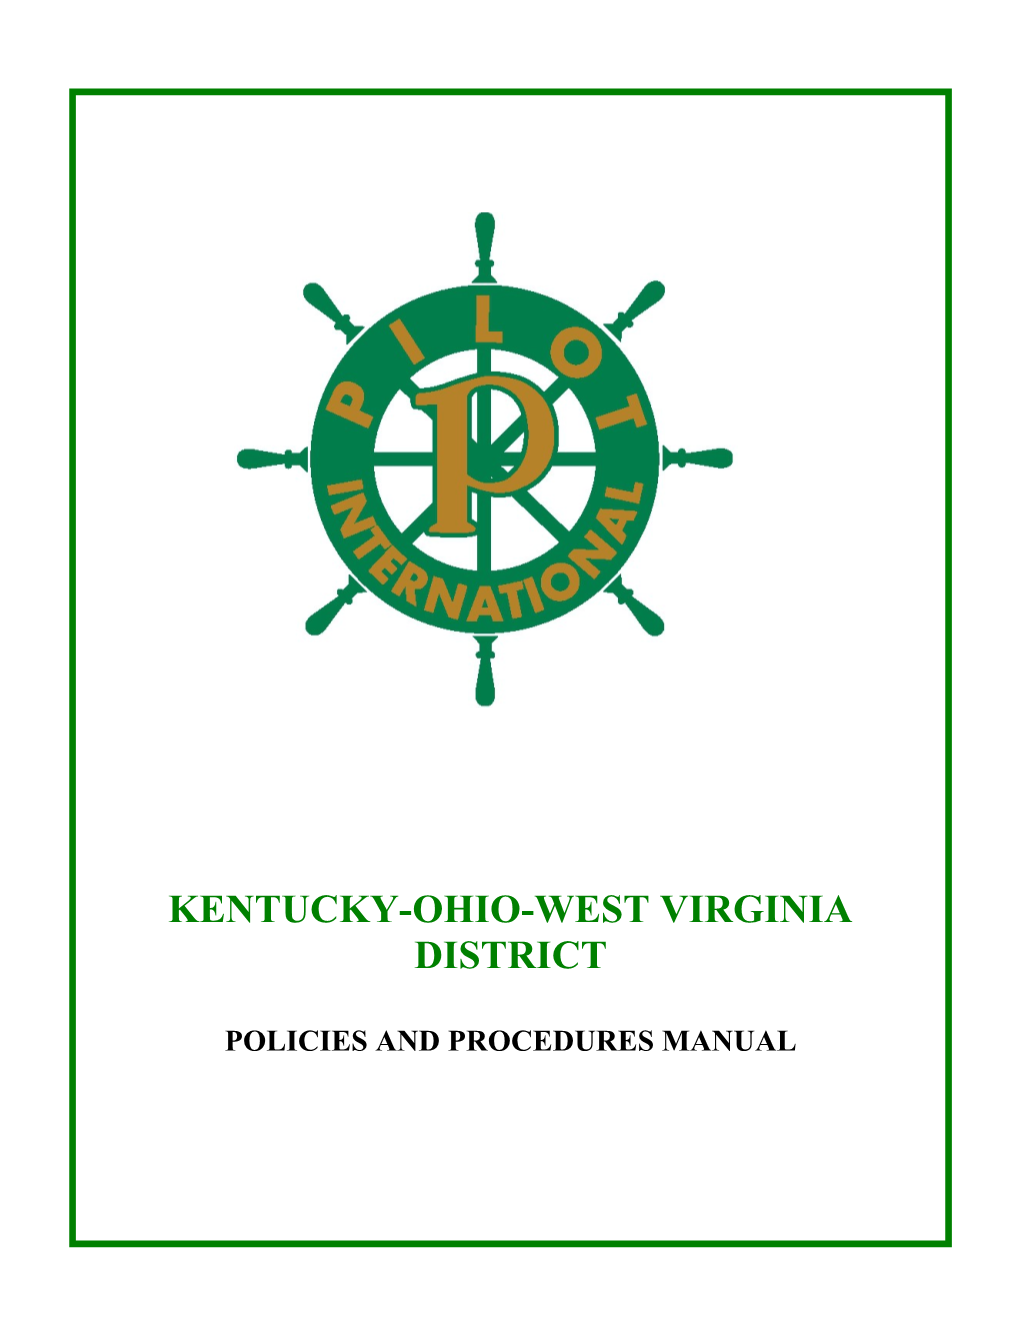 Kentucky-Ohio-West Virginia